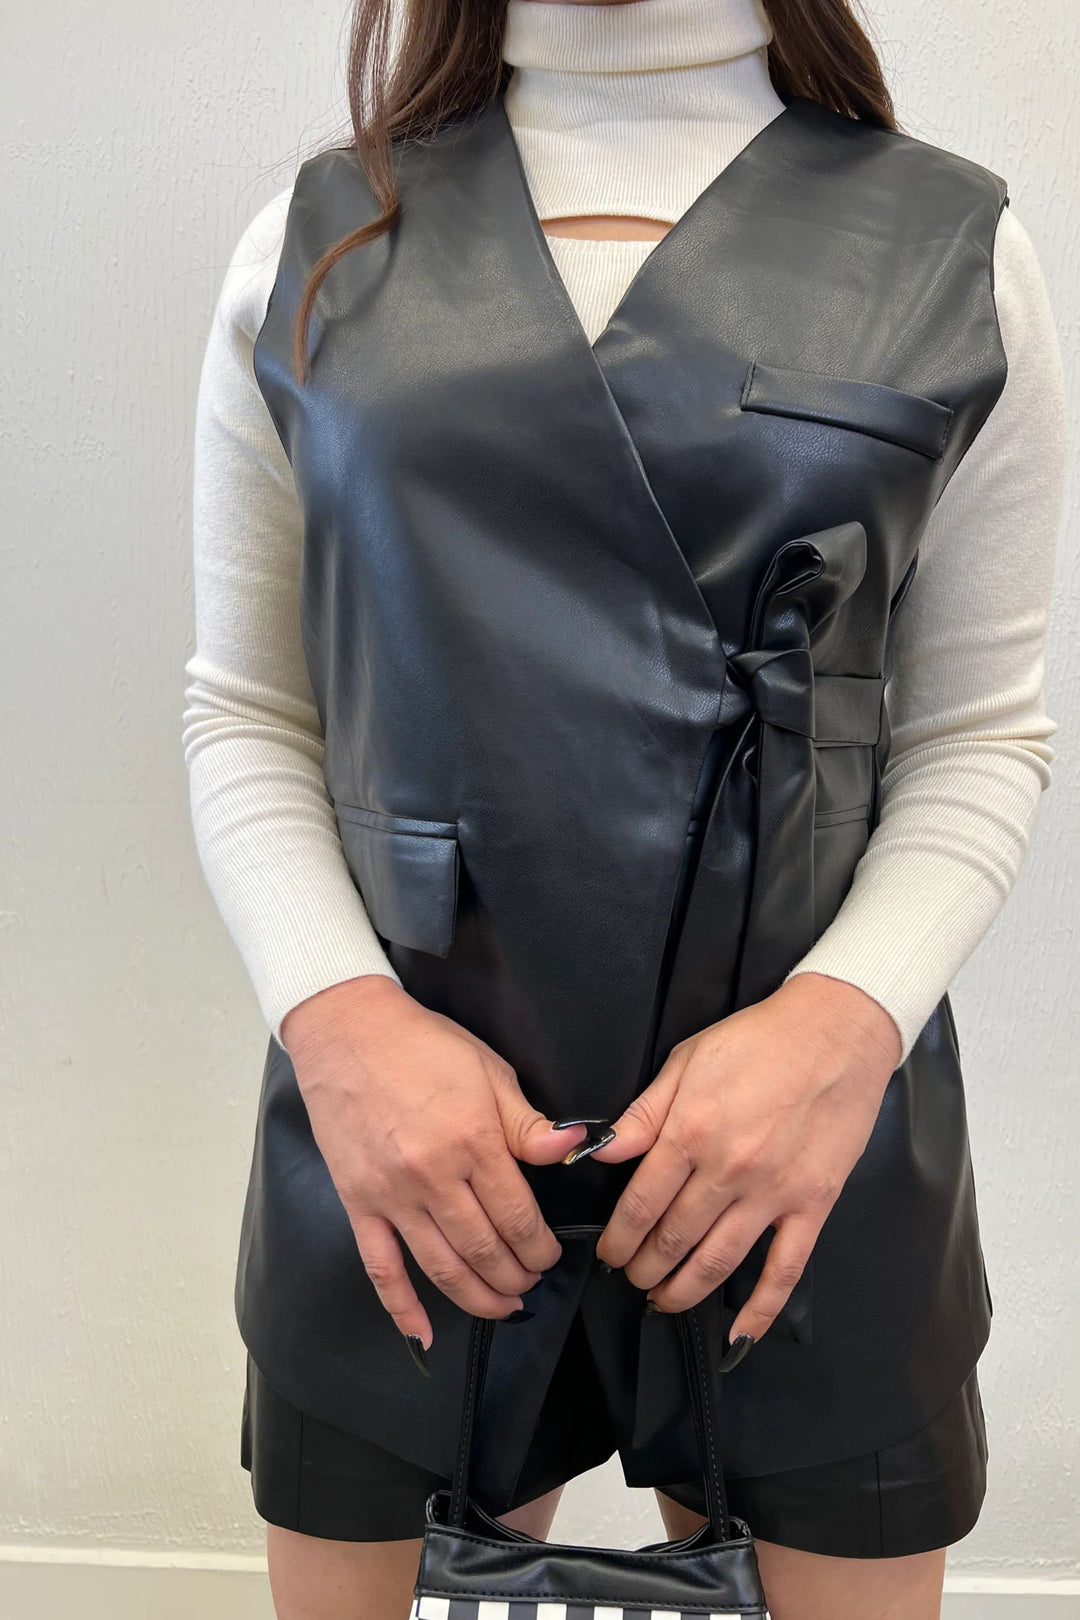 Sleeveless leather vest jacket for women